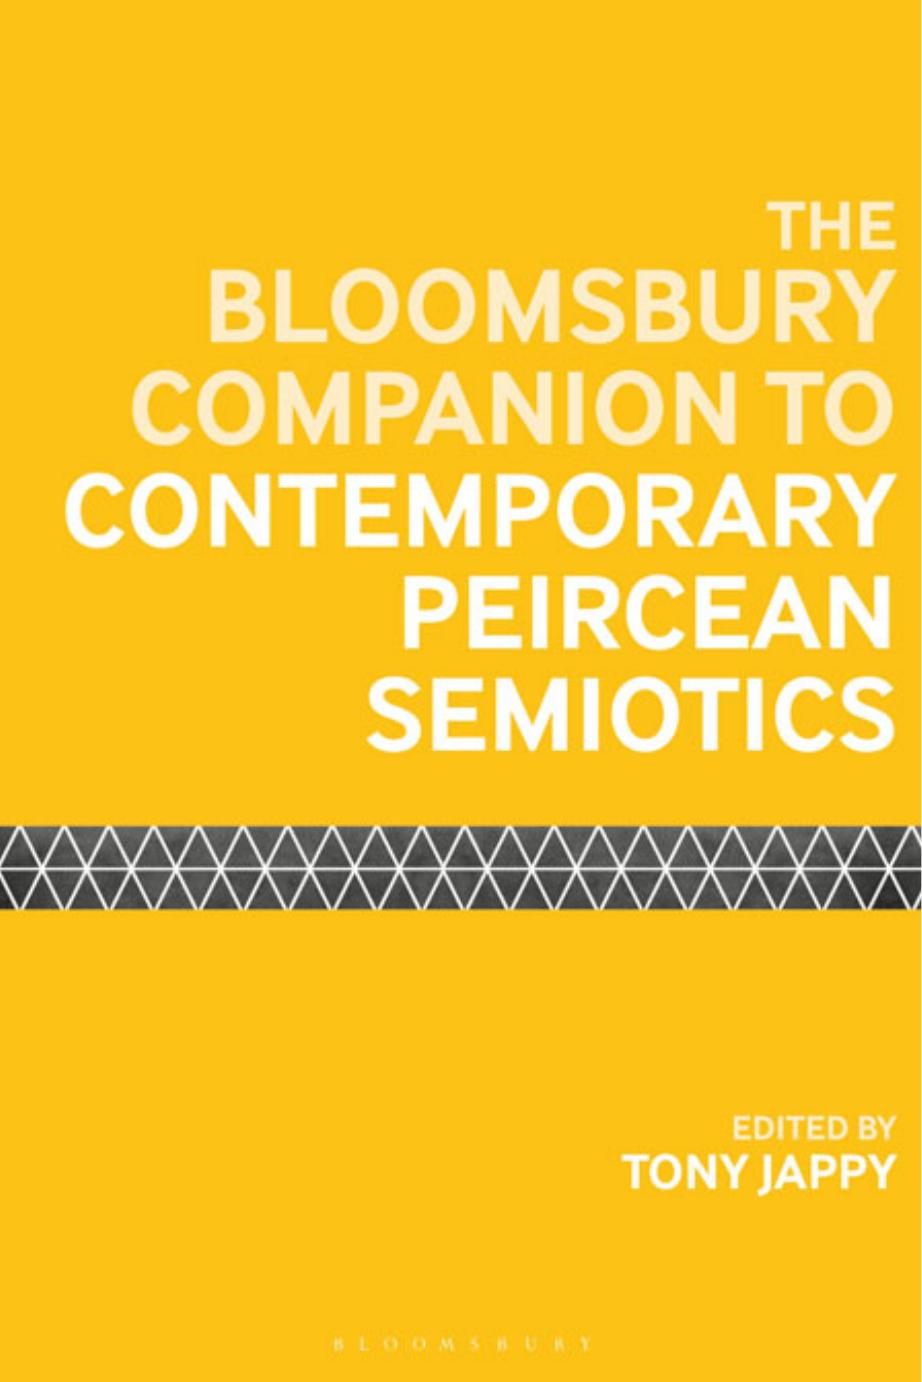 The Bloomsbury Companion to Contemporary Peircean Semiotics by Tony Jappy (editor)